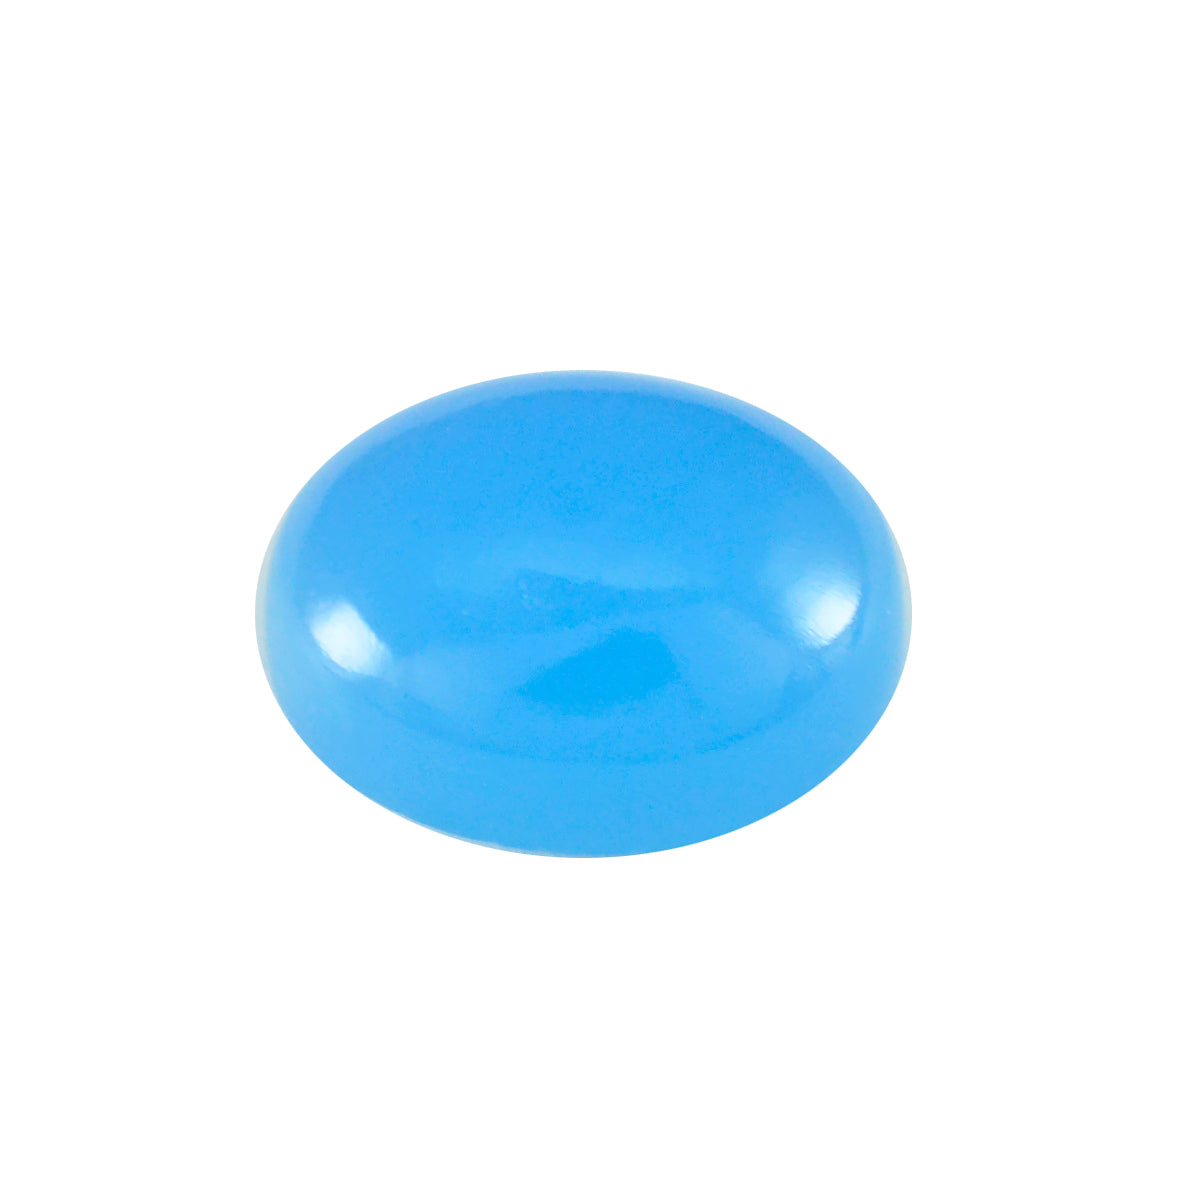 riyogems 1pc cabochon di calcedonio blu 10x12 mm gemma di forma ovale di bellezza e qualità